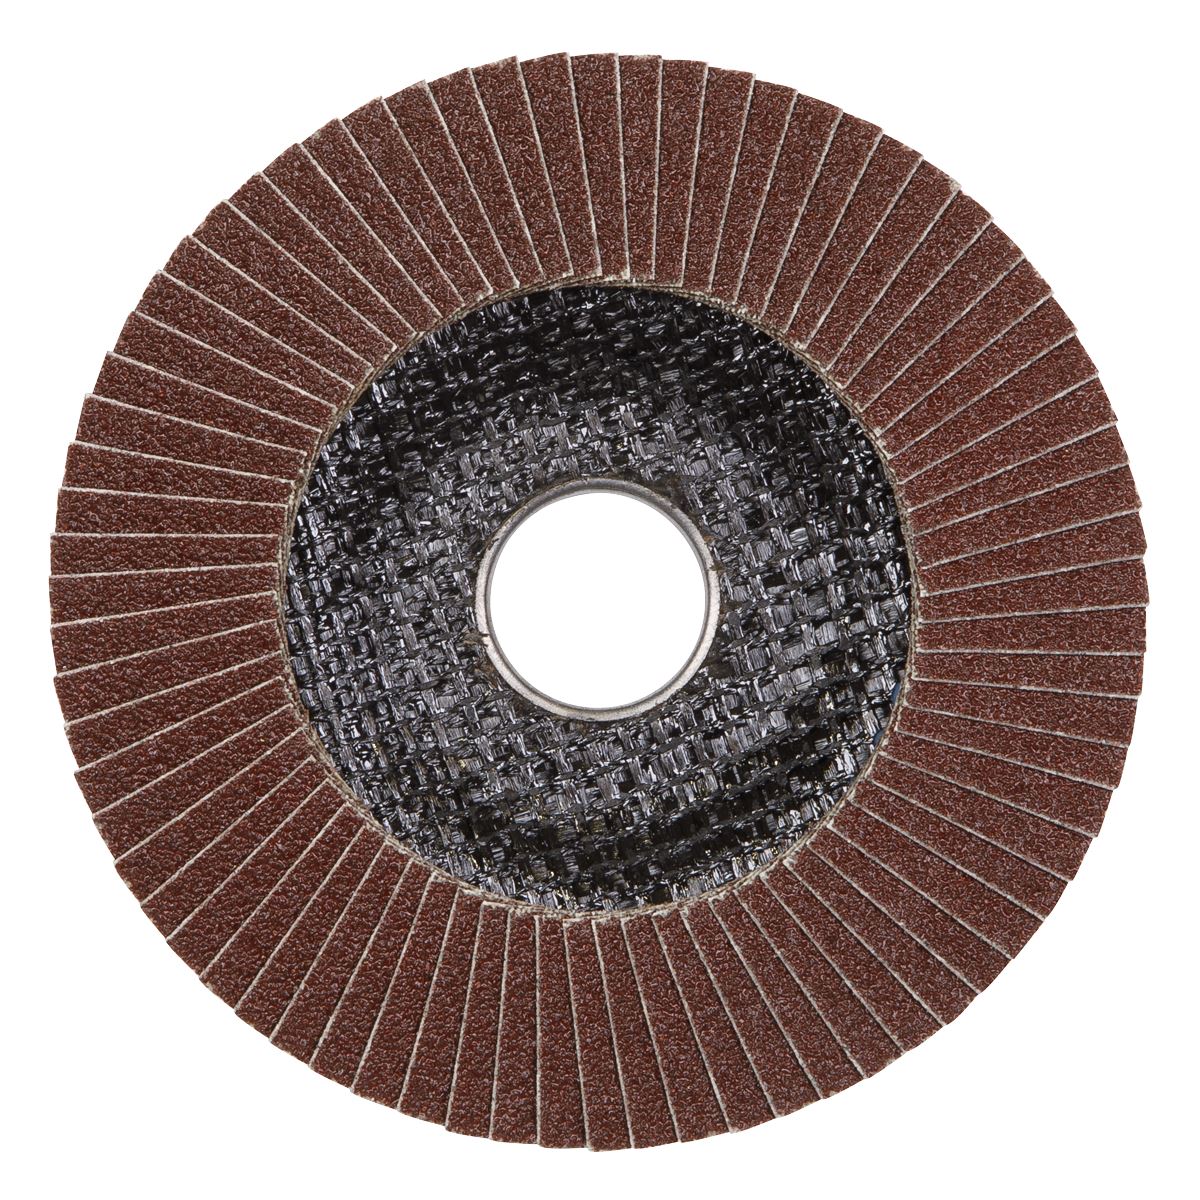 Sealey Flap Disc Aluminium Oxide Ø115mm Ø22mm Bore 40Grit